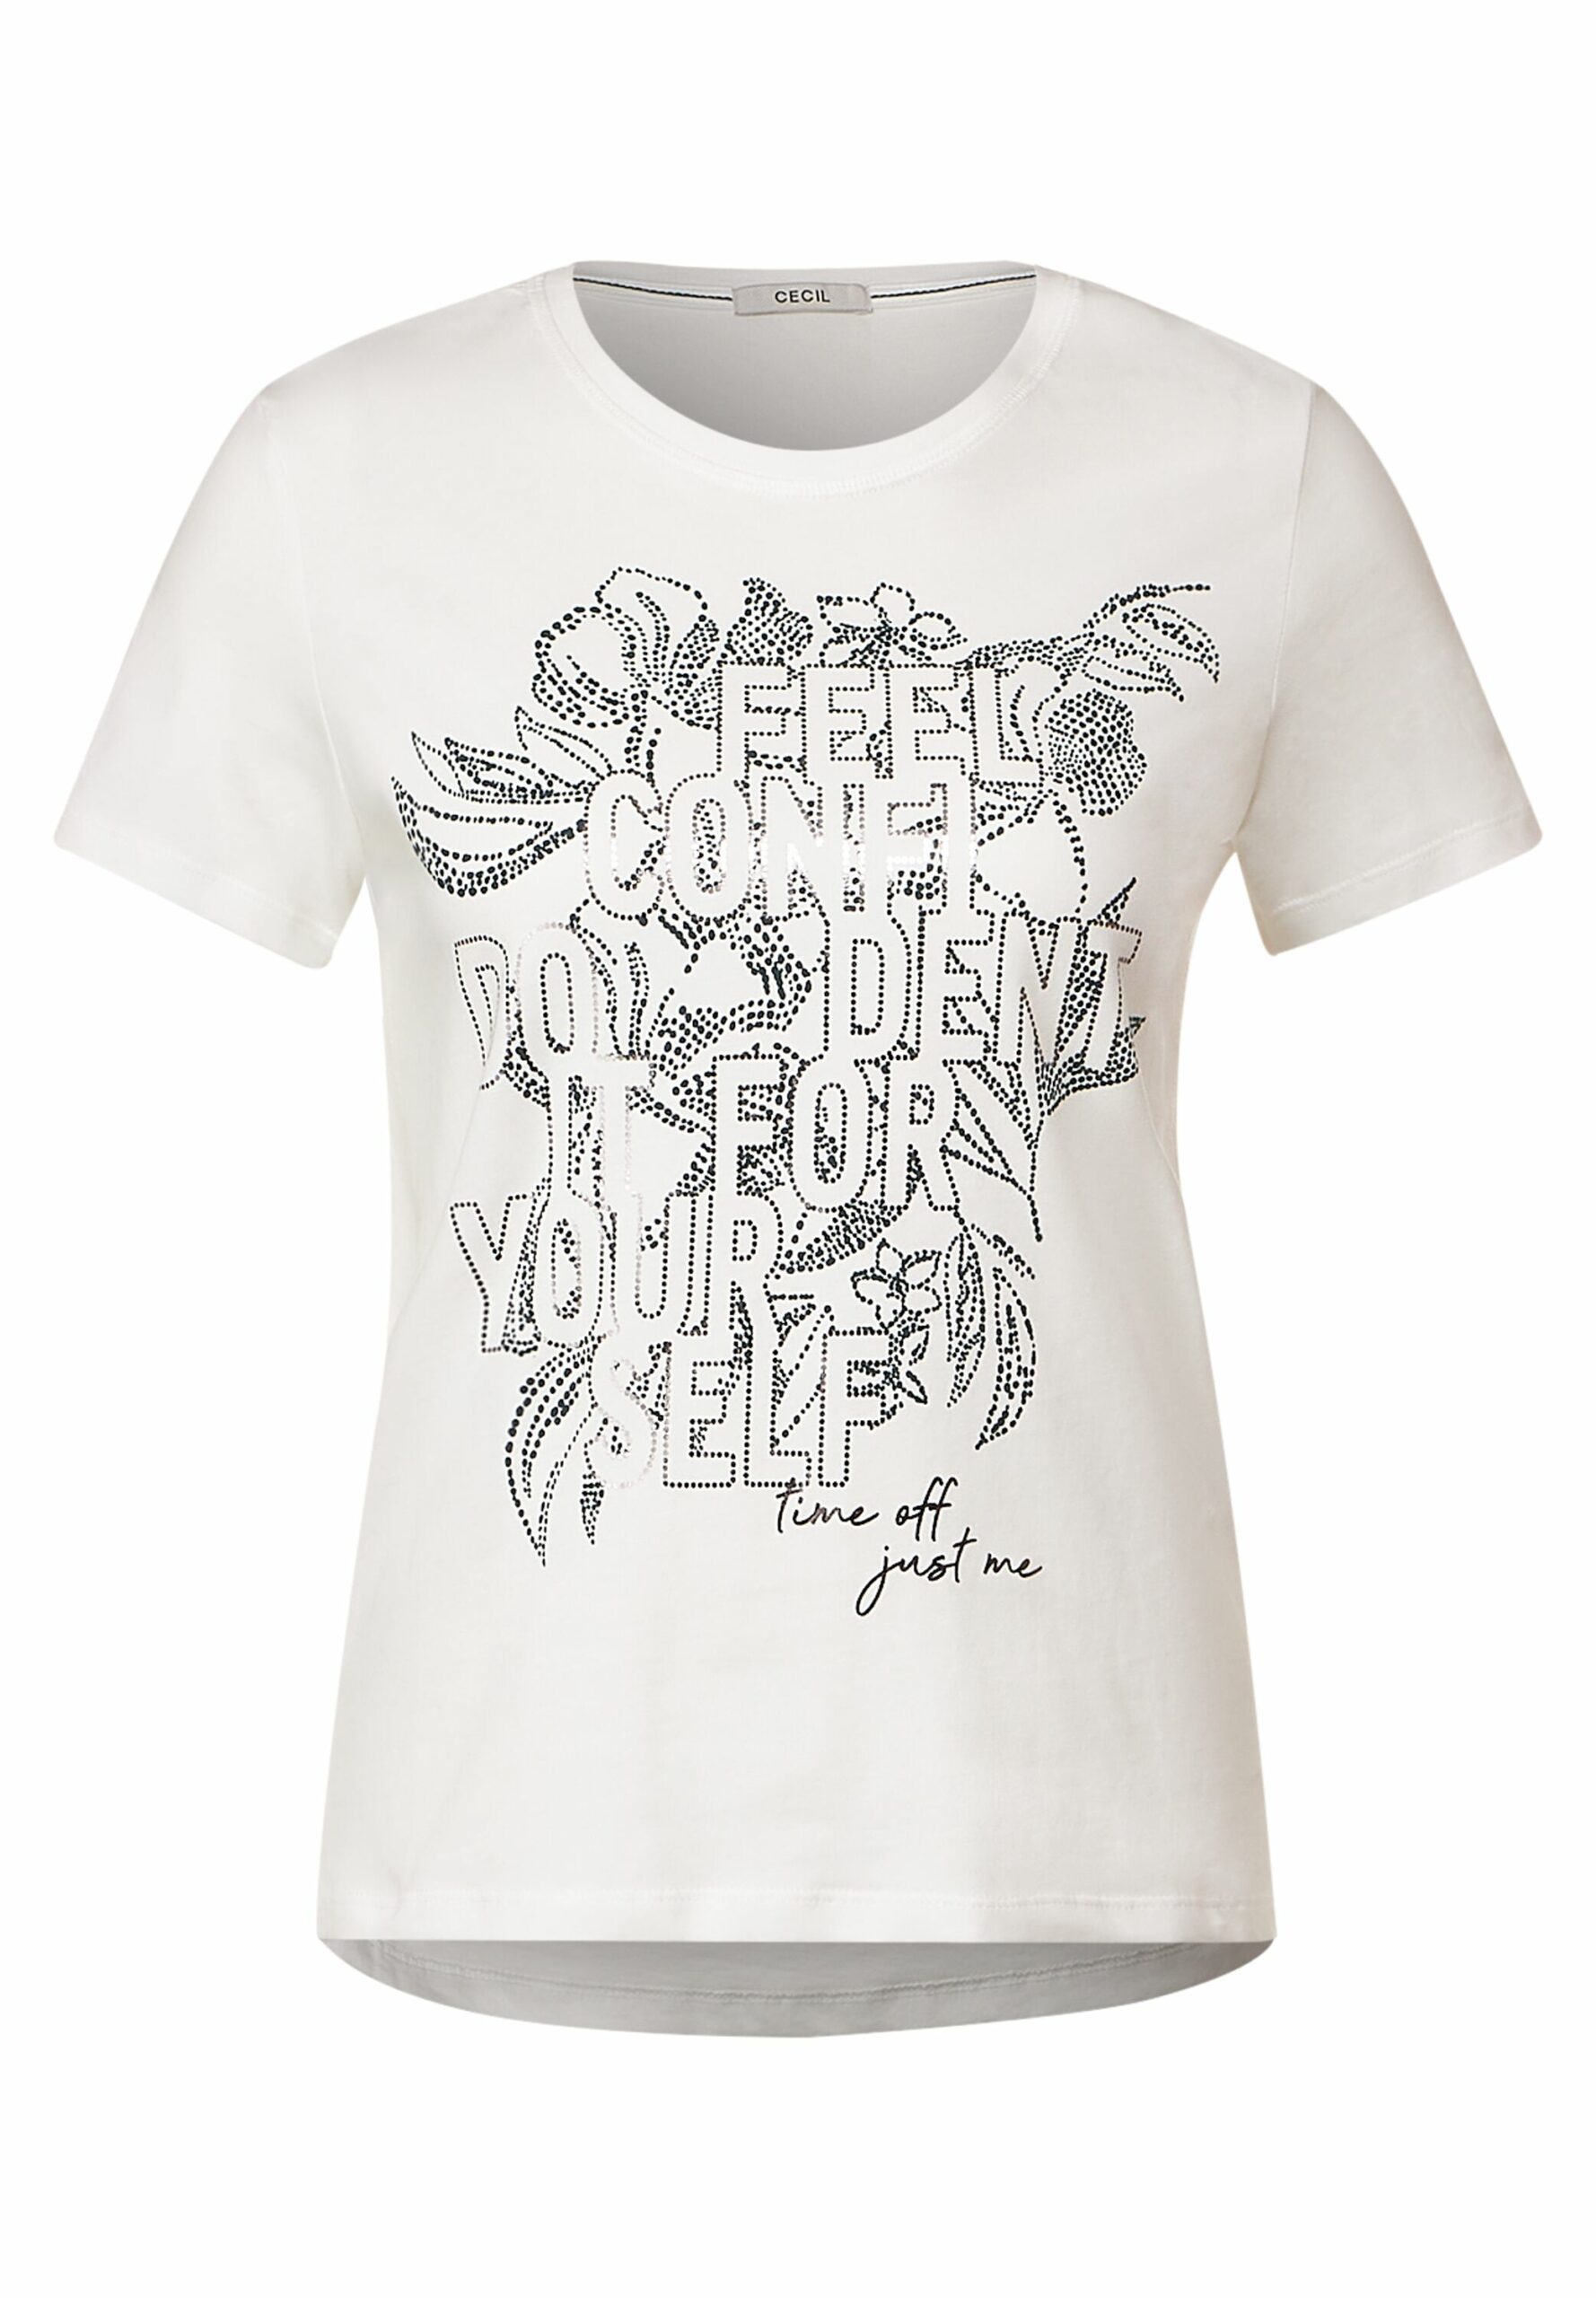 mit - Horsthemke Cecil Frontprint T-Shirt